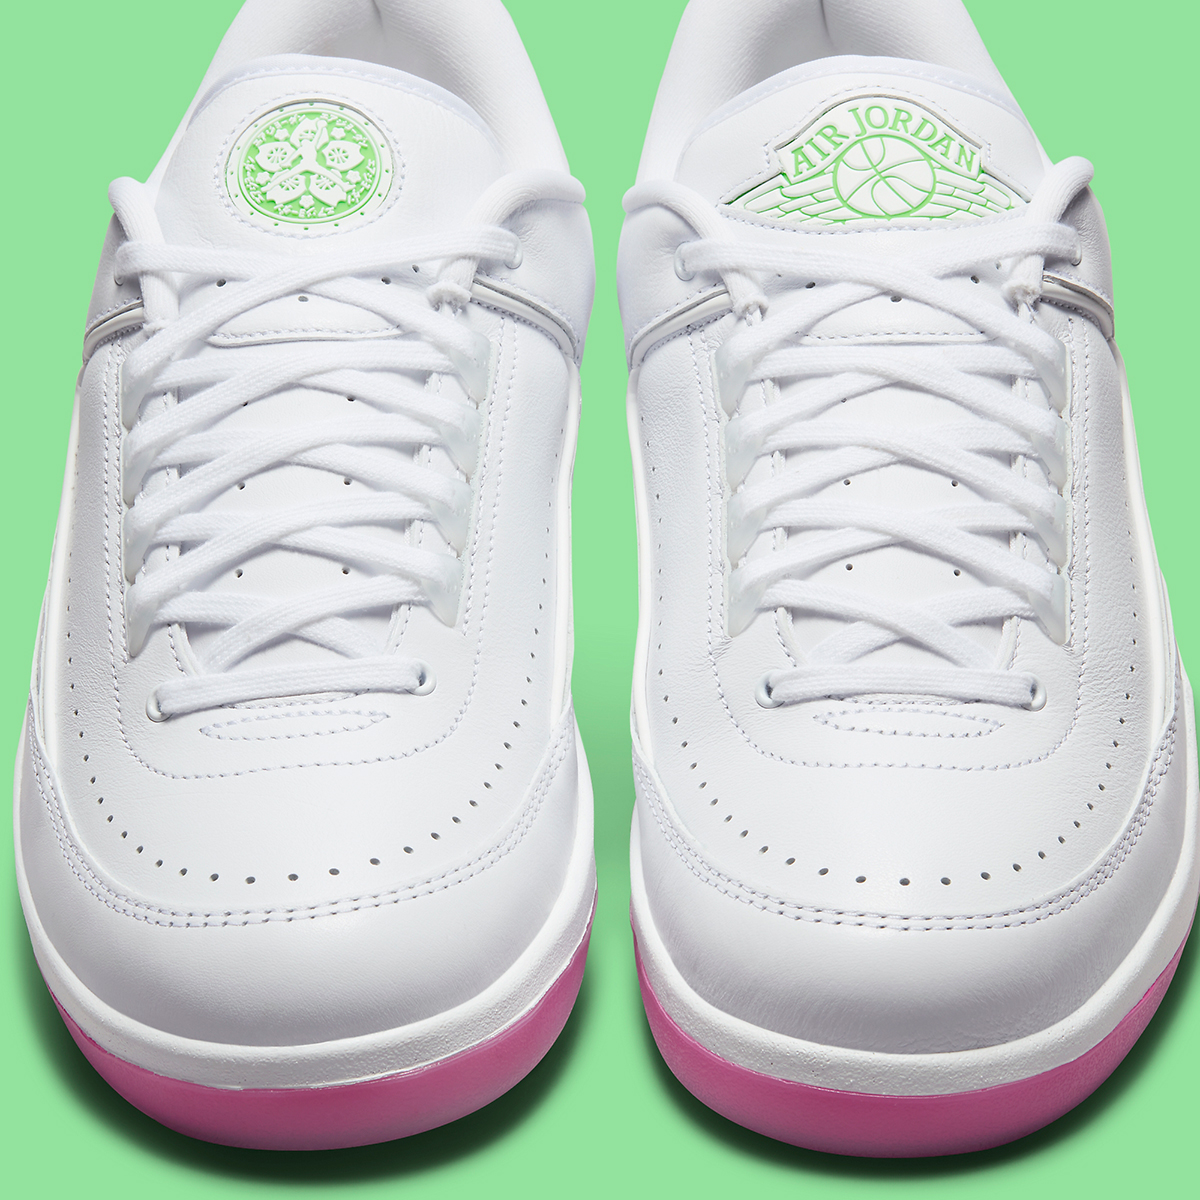 Air Jordan 11 CMFT Low-sko til større børn hvid Cherry Blossom Fq3228 100 9